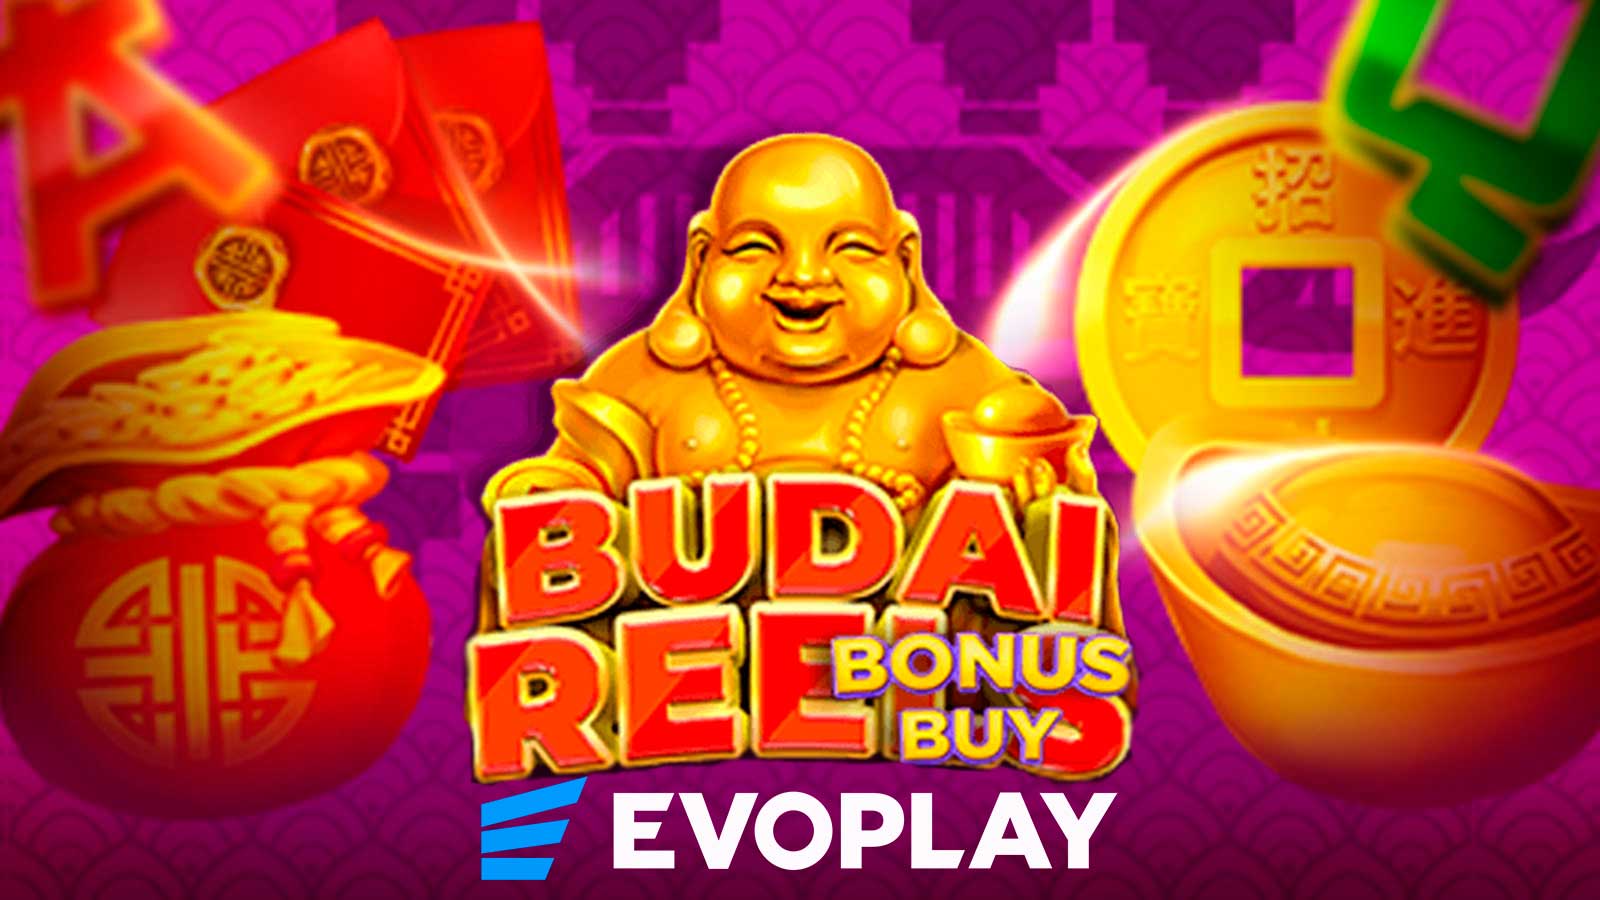 Evoplay представляє автомат Budai Reels Bonus Buy